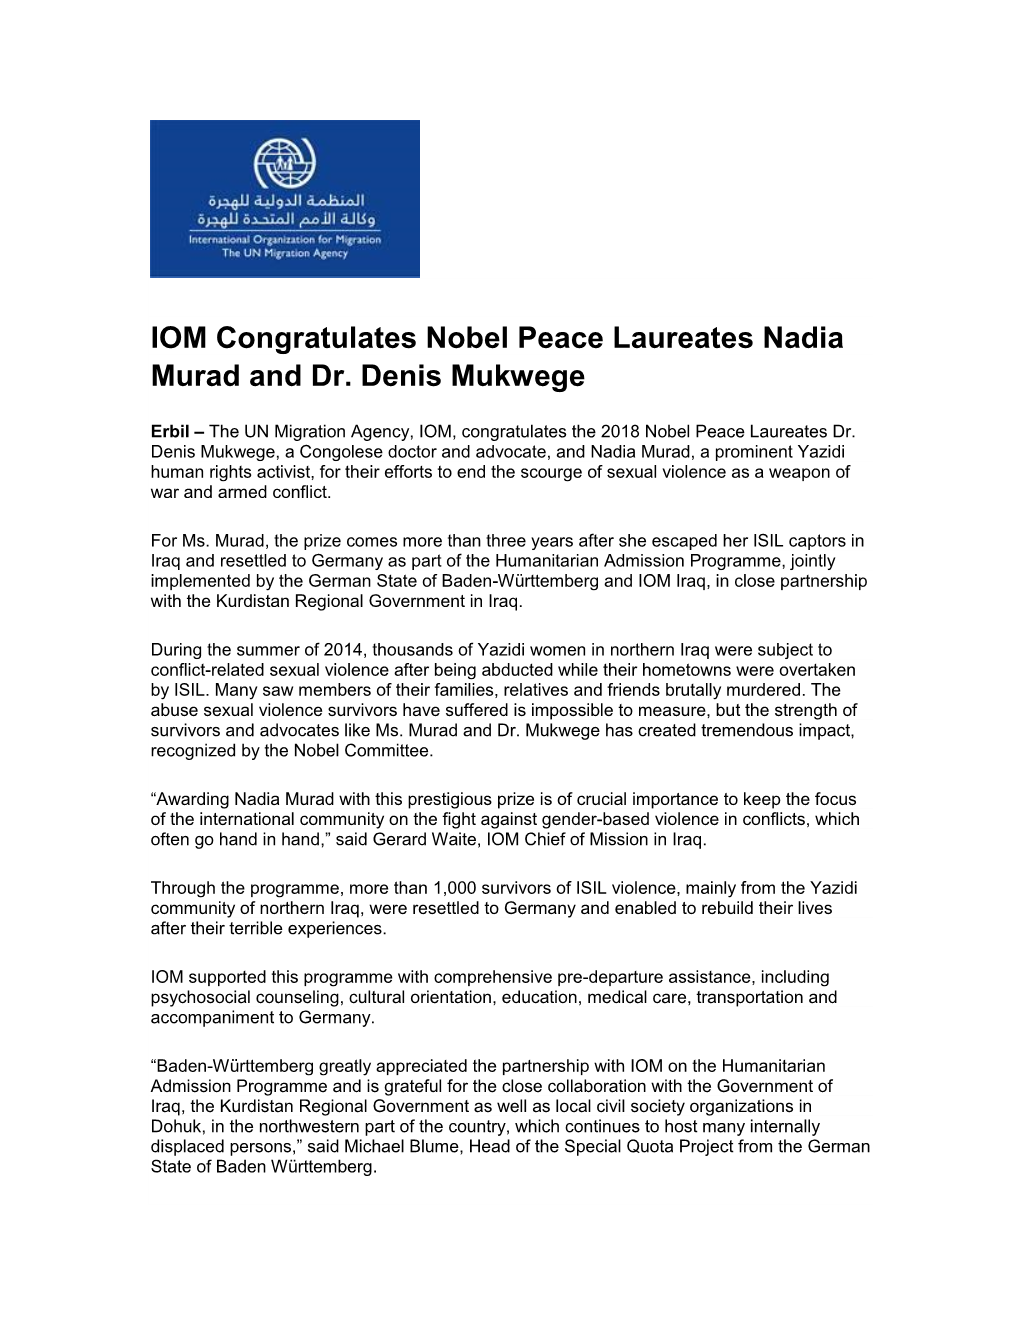 IOM Congratulates Nobel Peace Laureates Nadia Murad and Dr